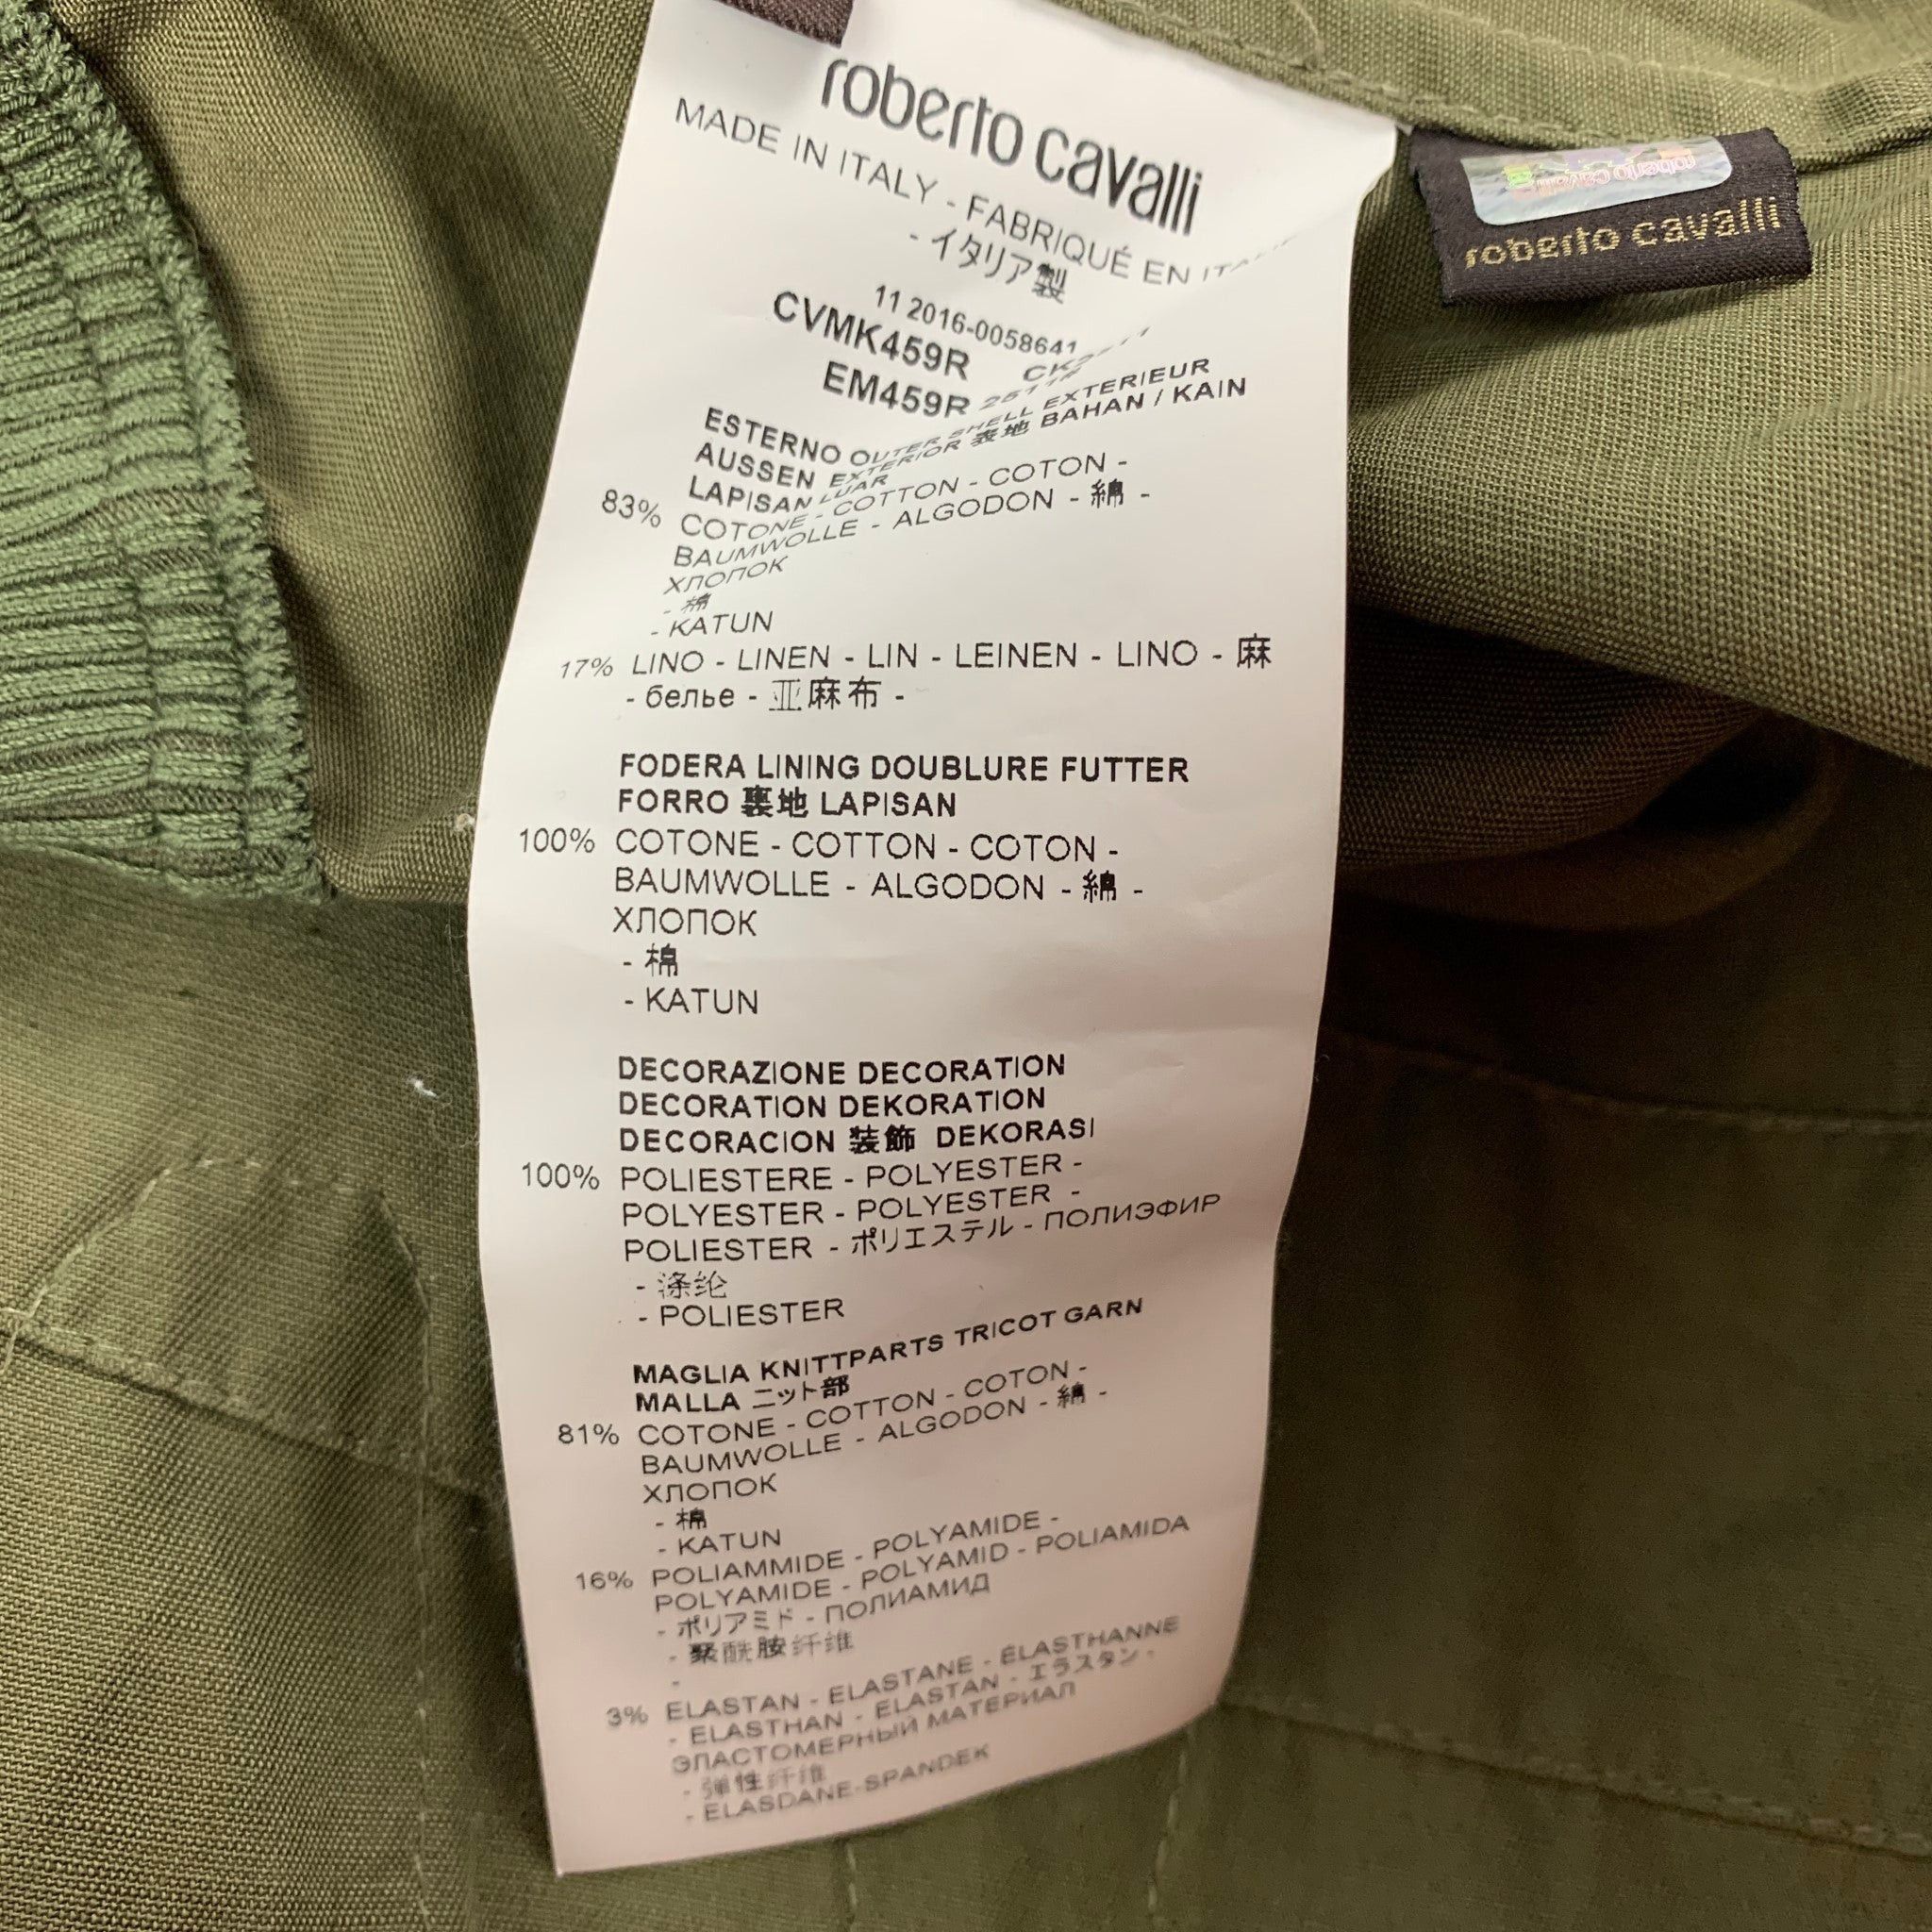 Roberto Cavalli 2016 Green Beaded Cotton Linen Zip Up Jacket Size US S / EU 44-46 / 1 - 5 Thumbnail